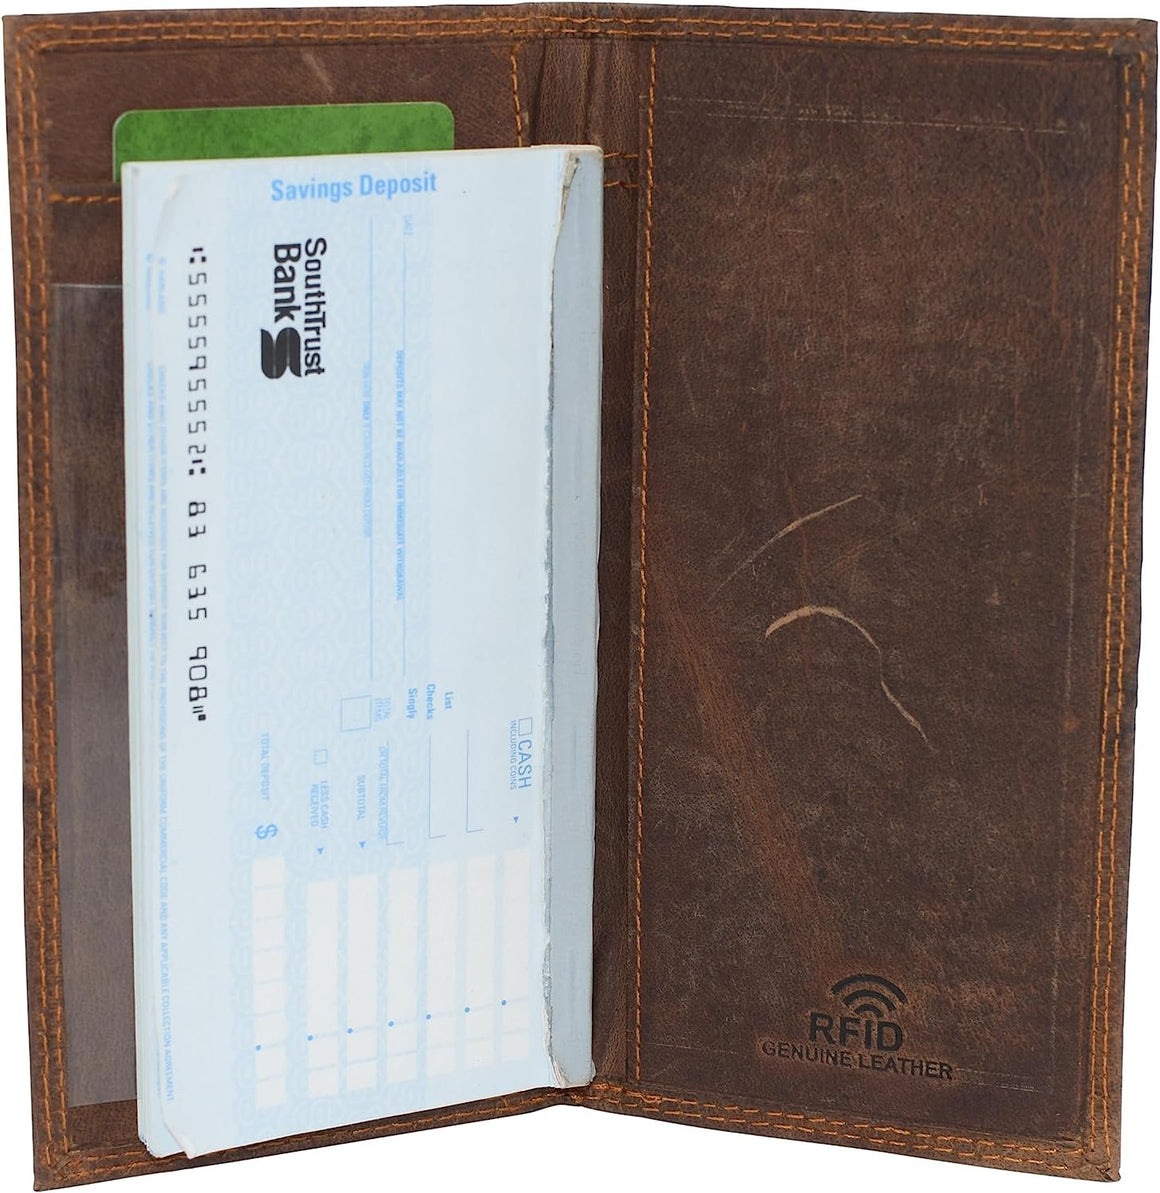 CAZORO Premium Vintage Leather RFID Blocking Slim Checkbook Cover Wallet (Brown)-menswallet